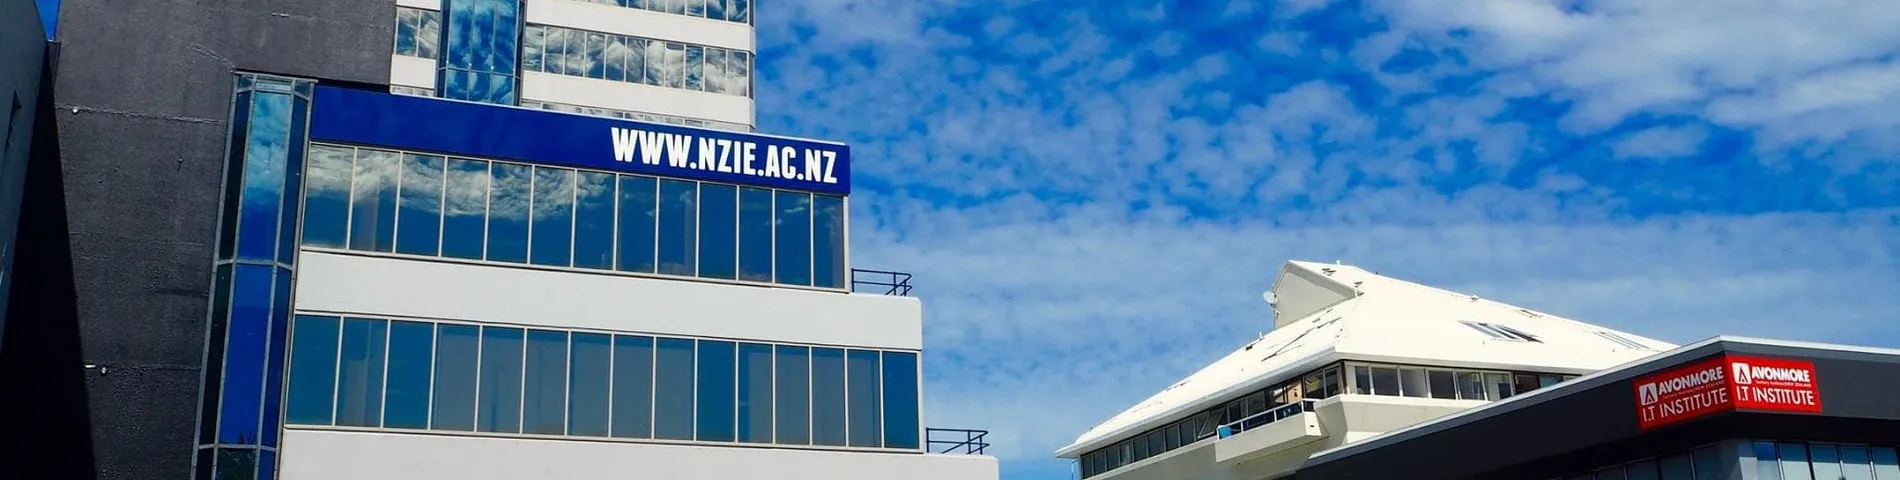 NZIE - New Zealand Institute of Education kép 1